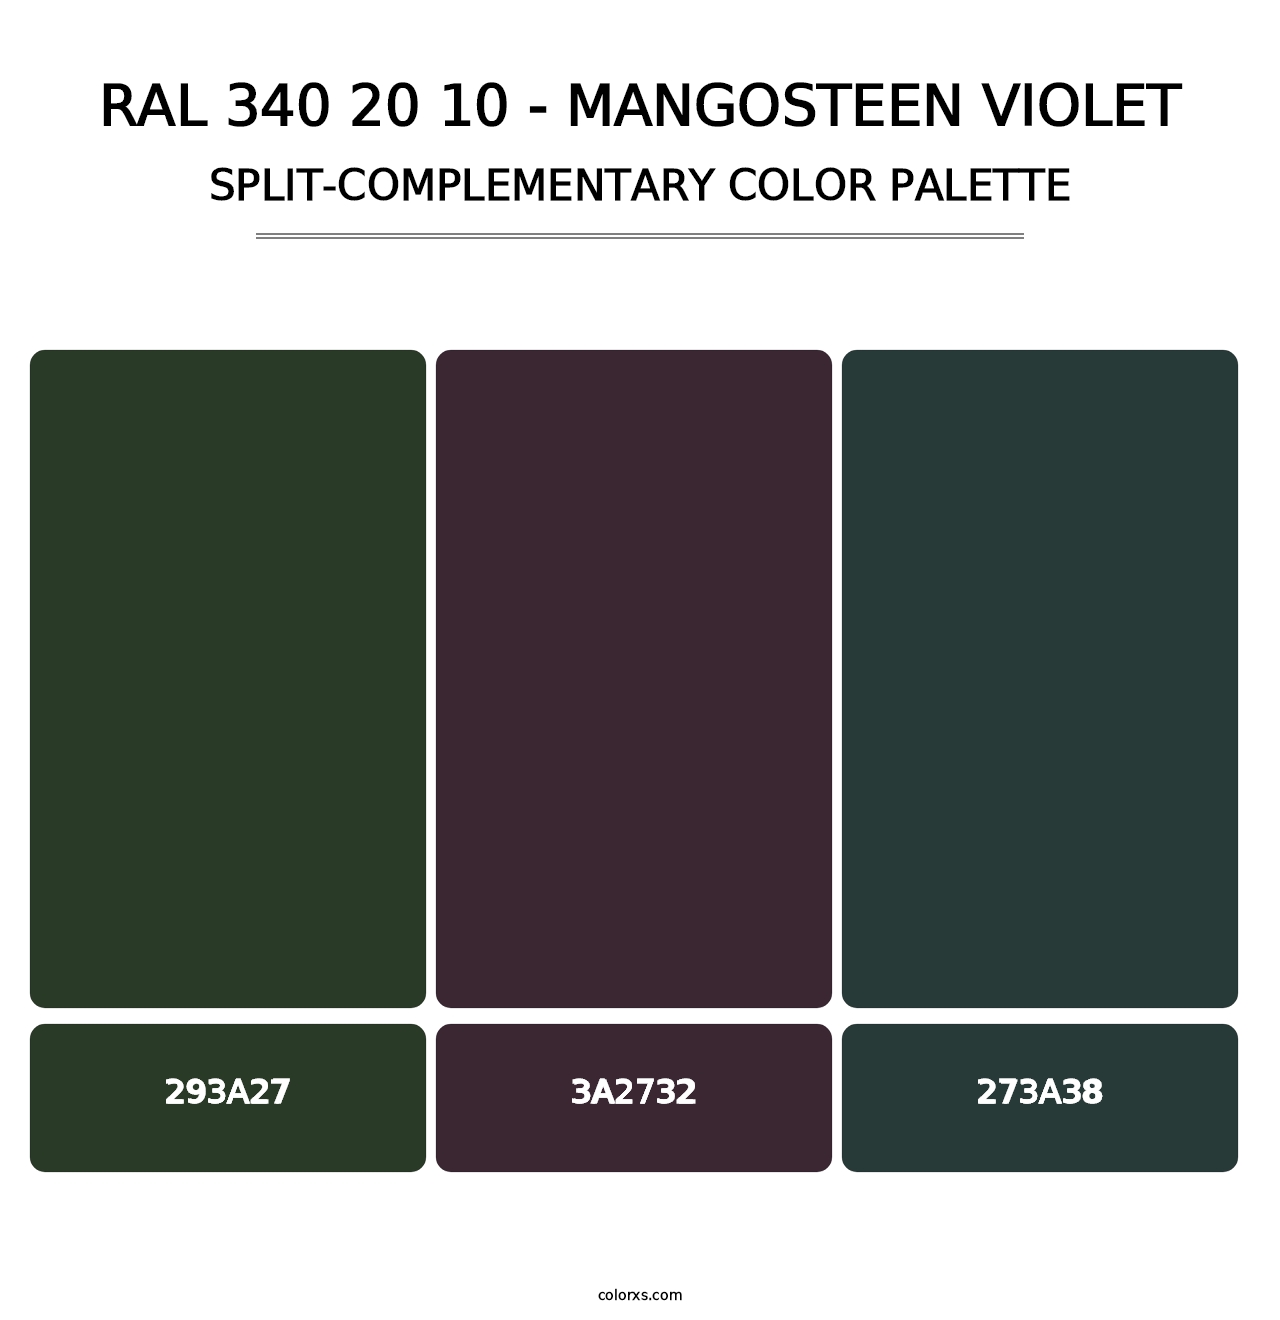 RAL 340 20 10 - Mangosteen Violet - Split-Complementary Color Palette